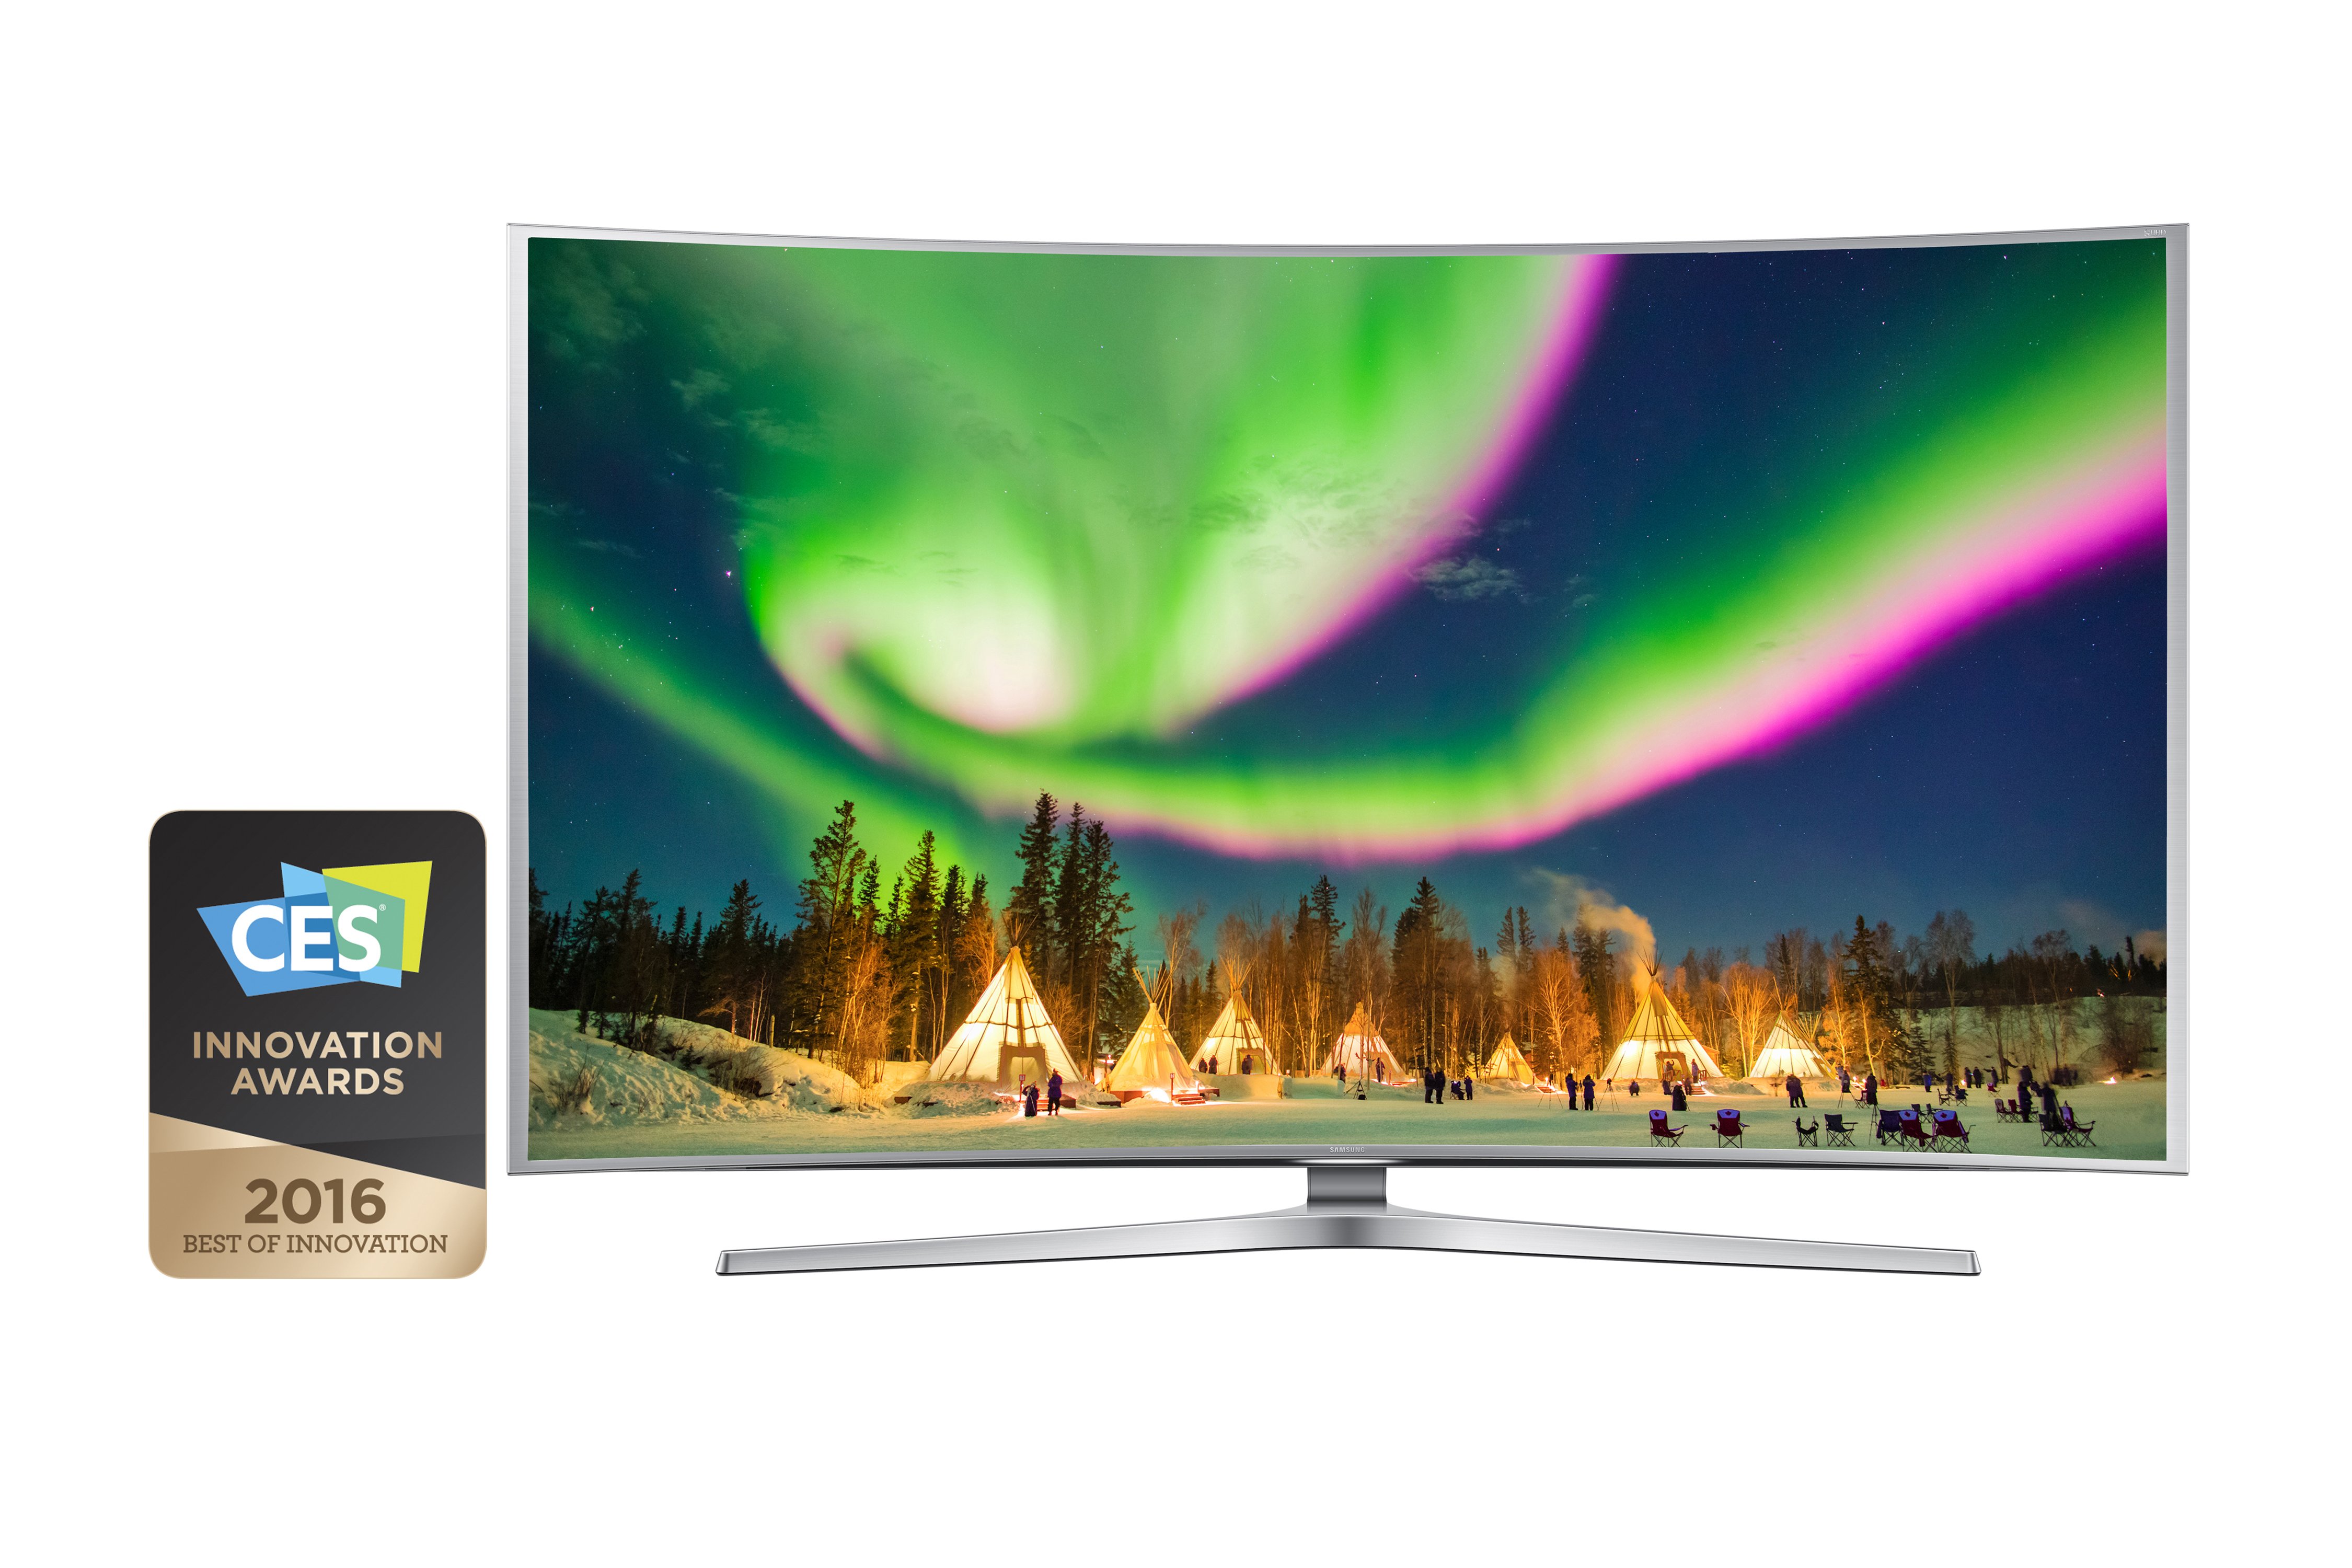 Samsung Electronics New Smart TV Won CES Best of Innovation Award